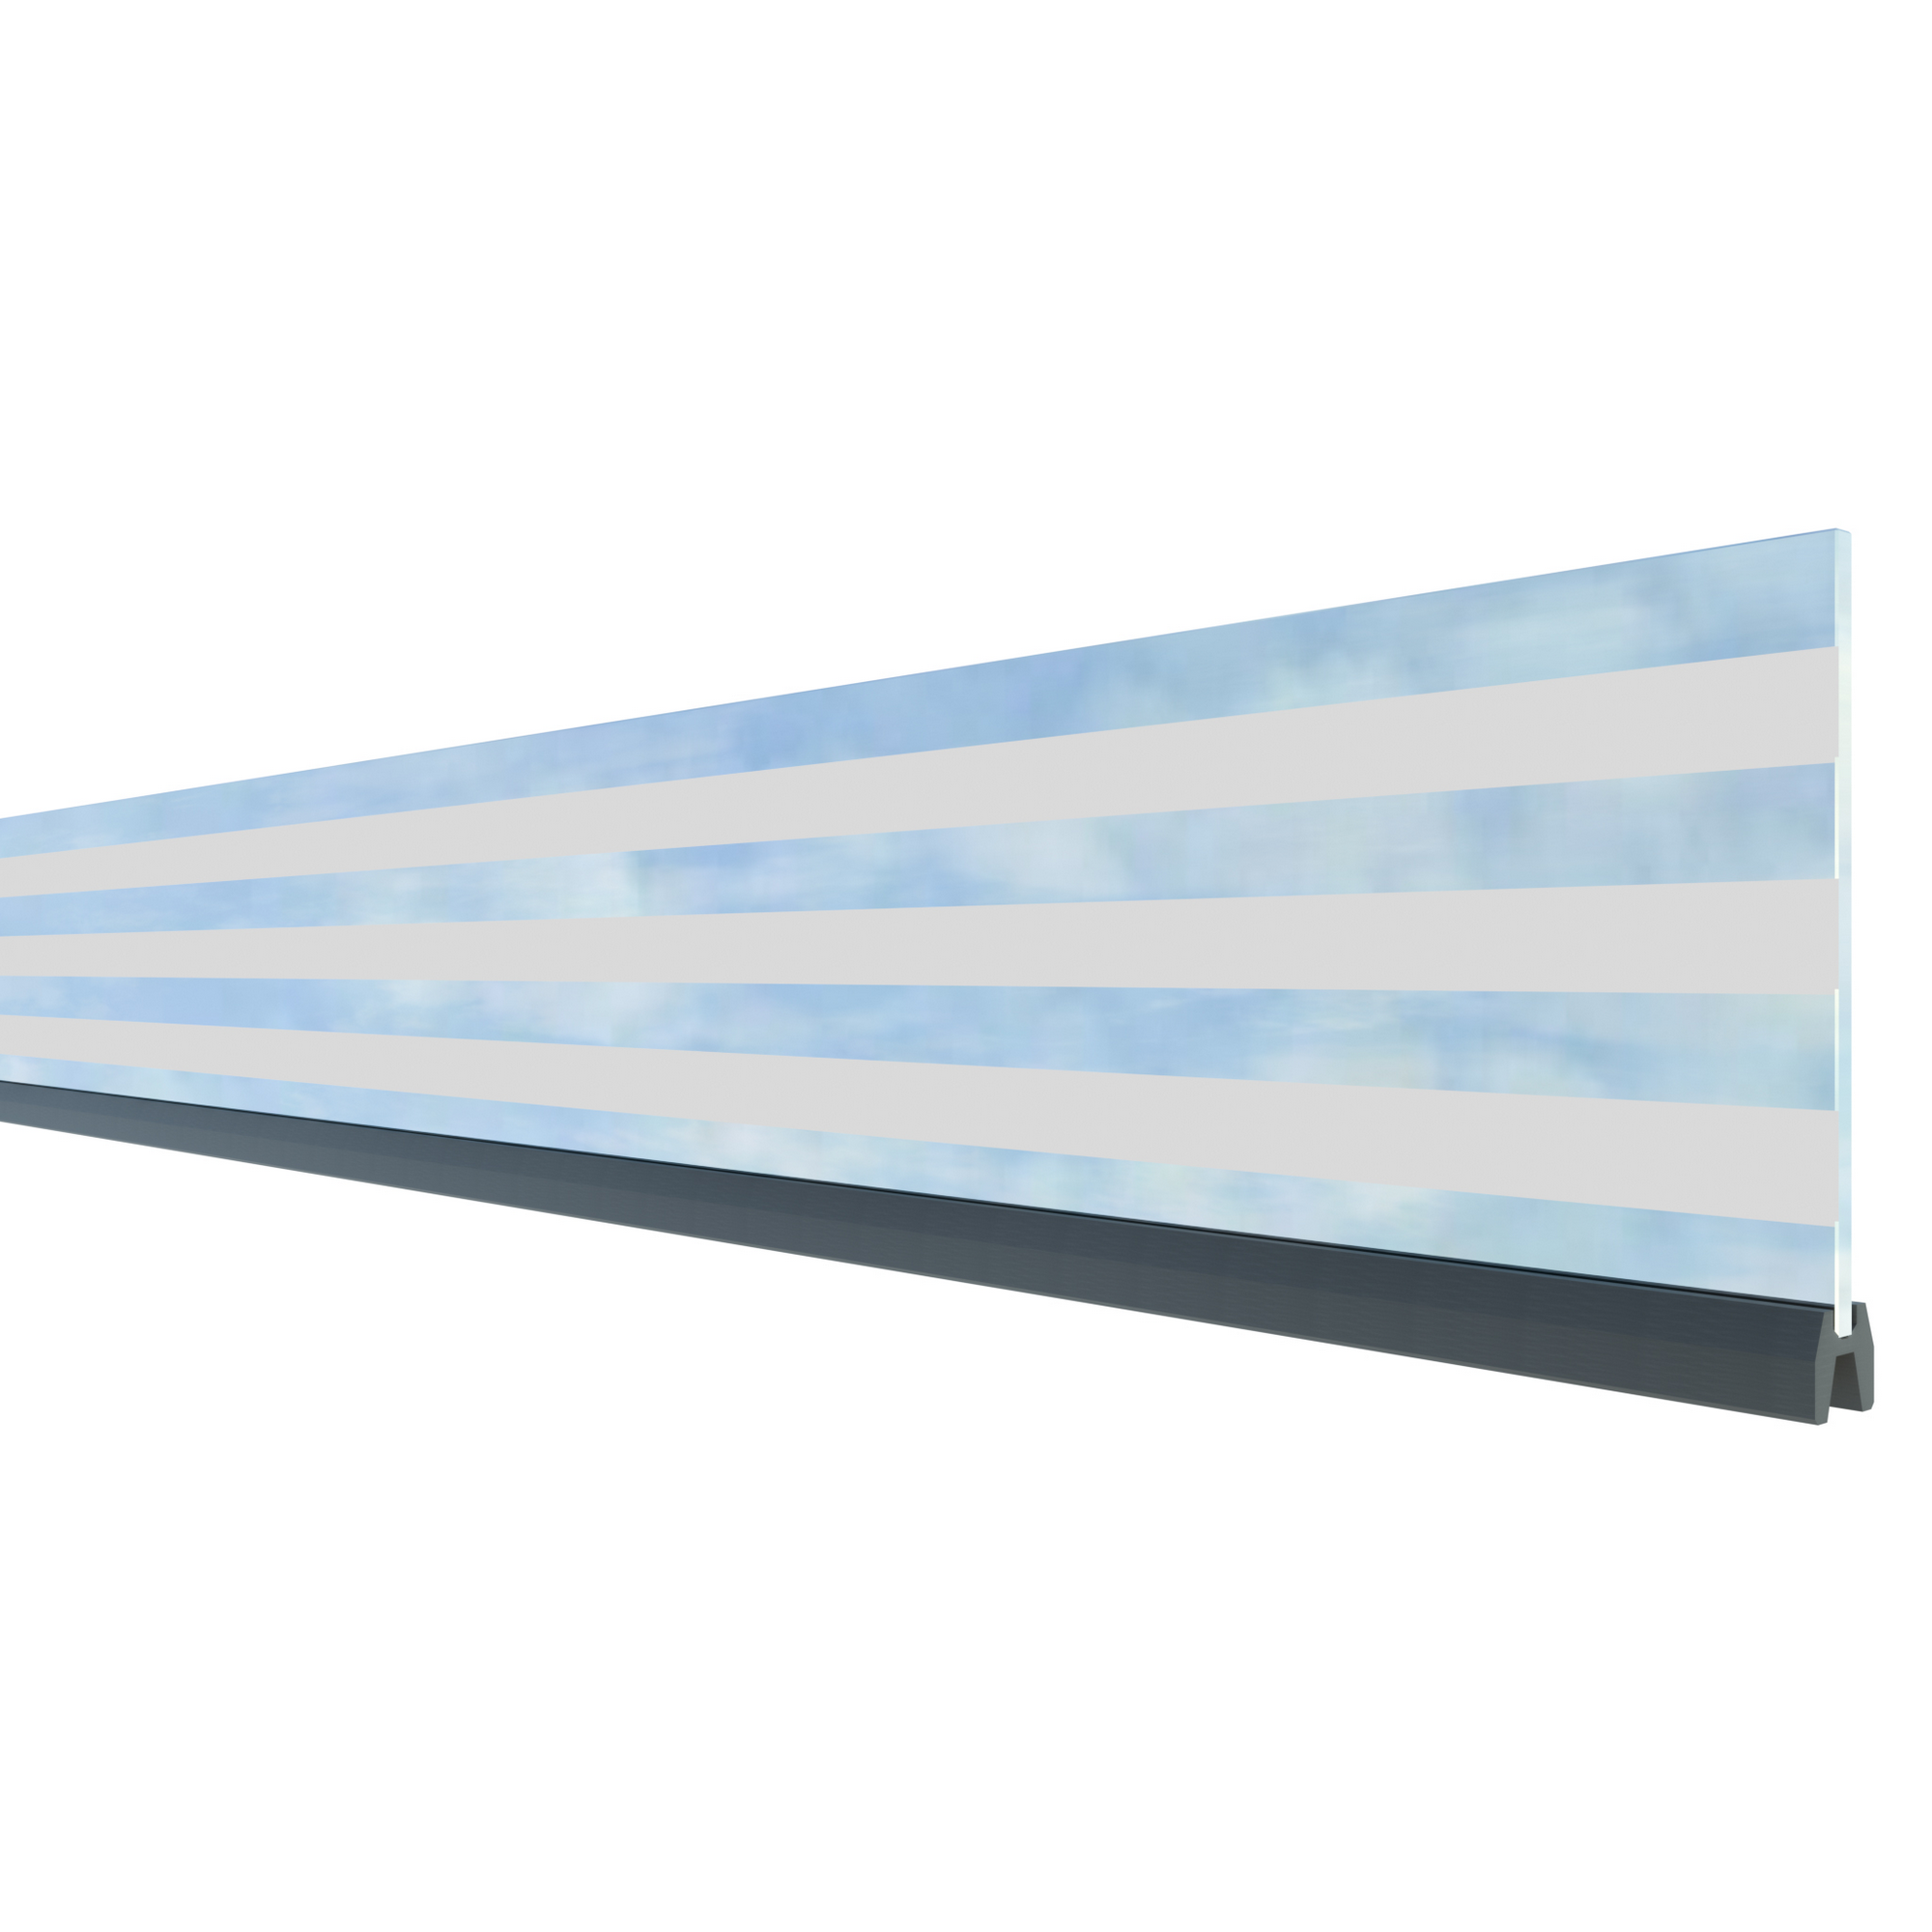 Dekorprofil-Set 'System Delta' Glas blau-weiß, 15 x 178 x 0,6 cm + product picture